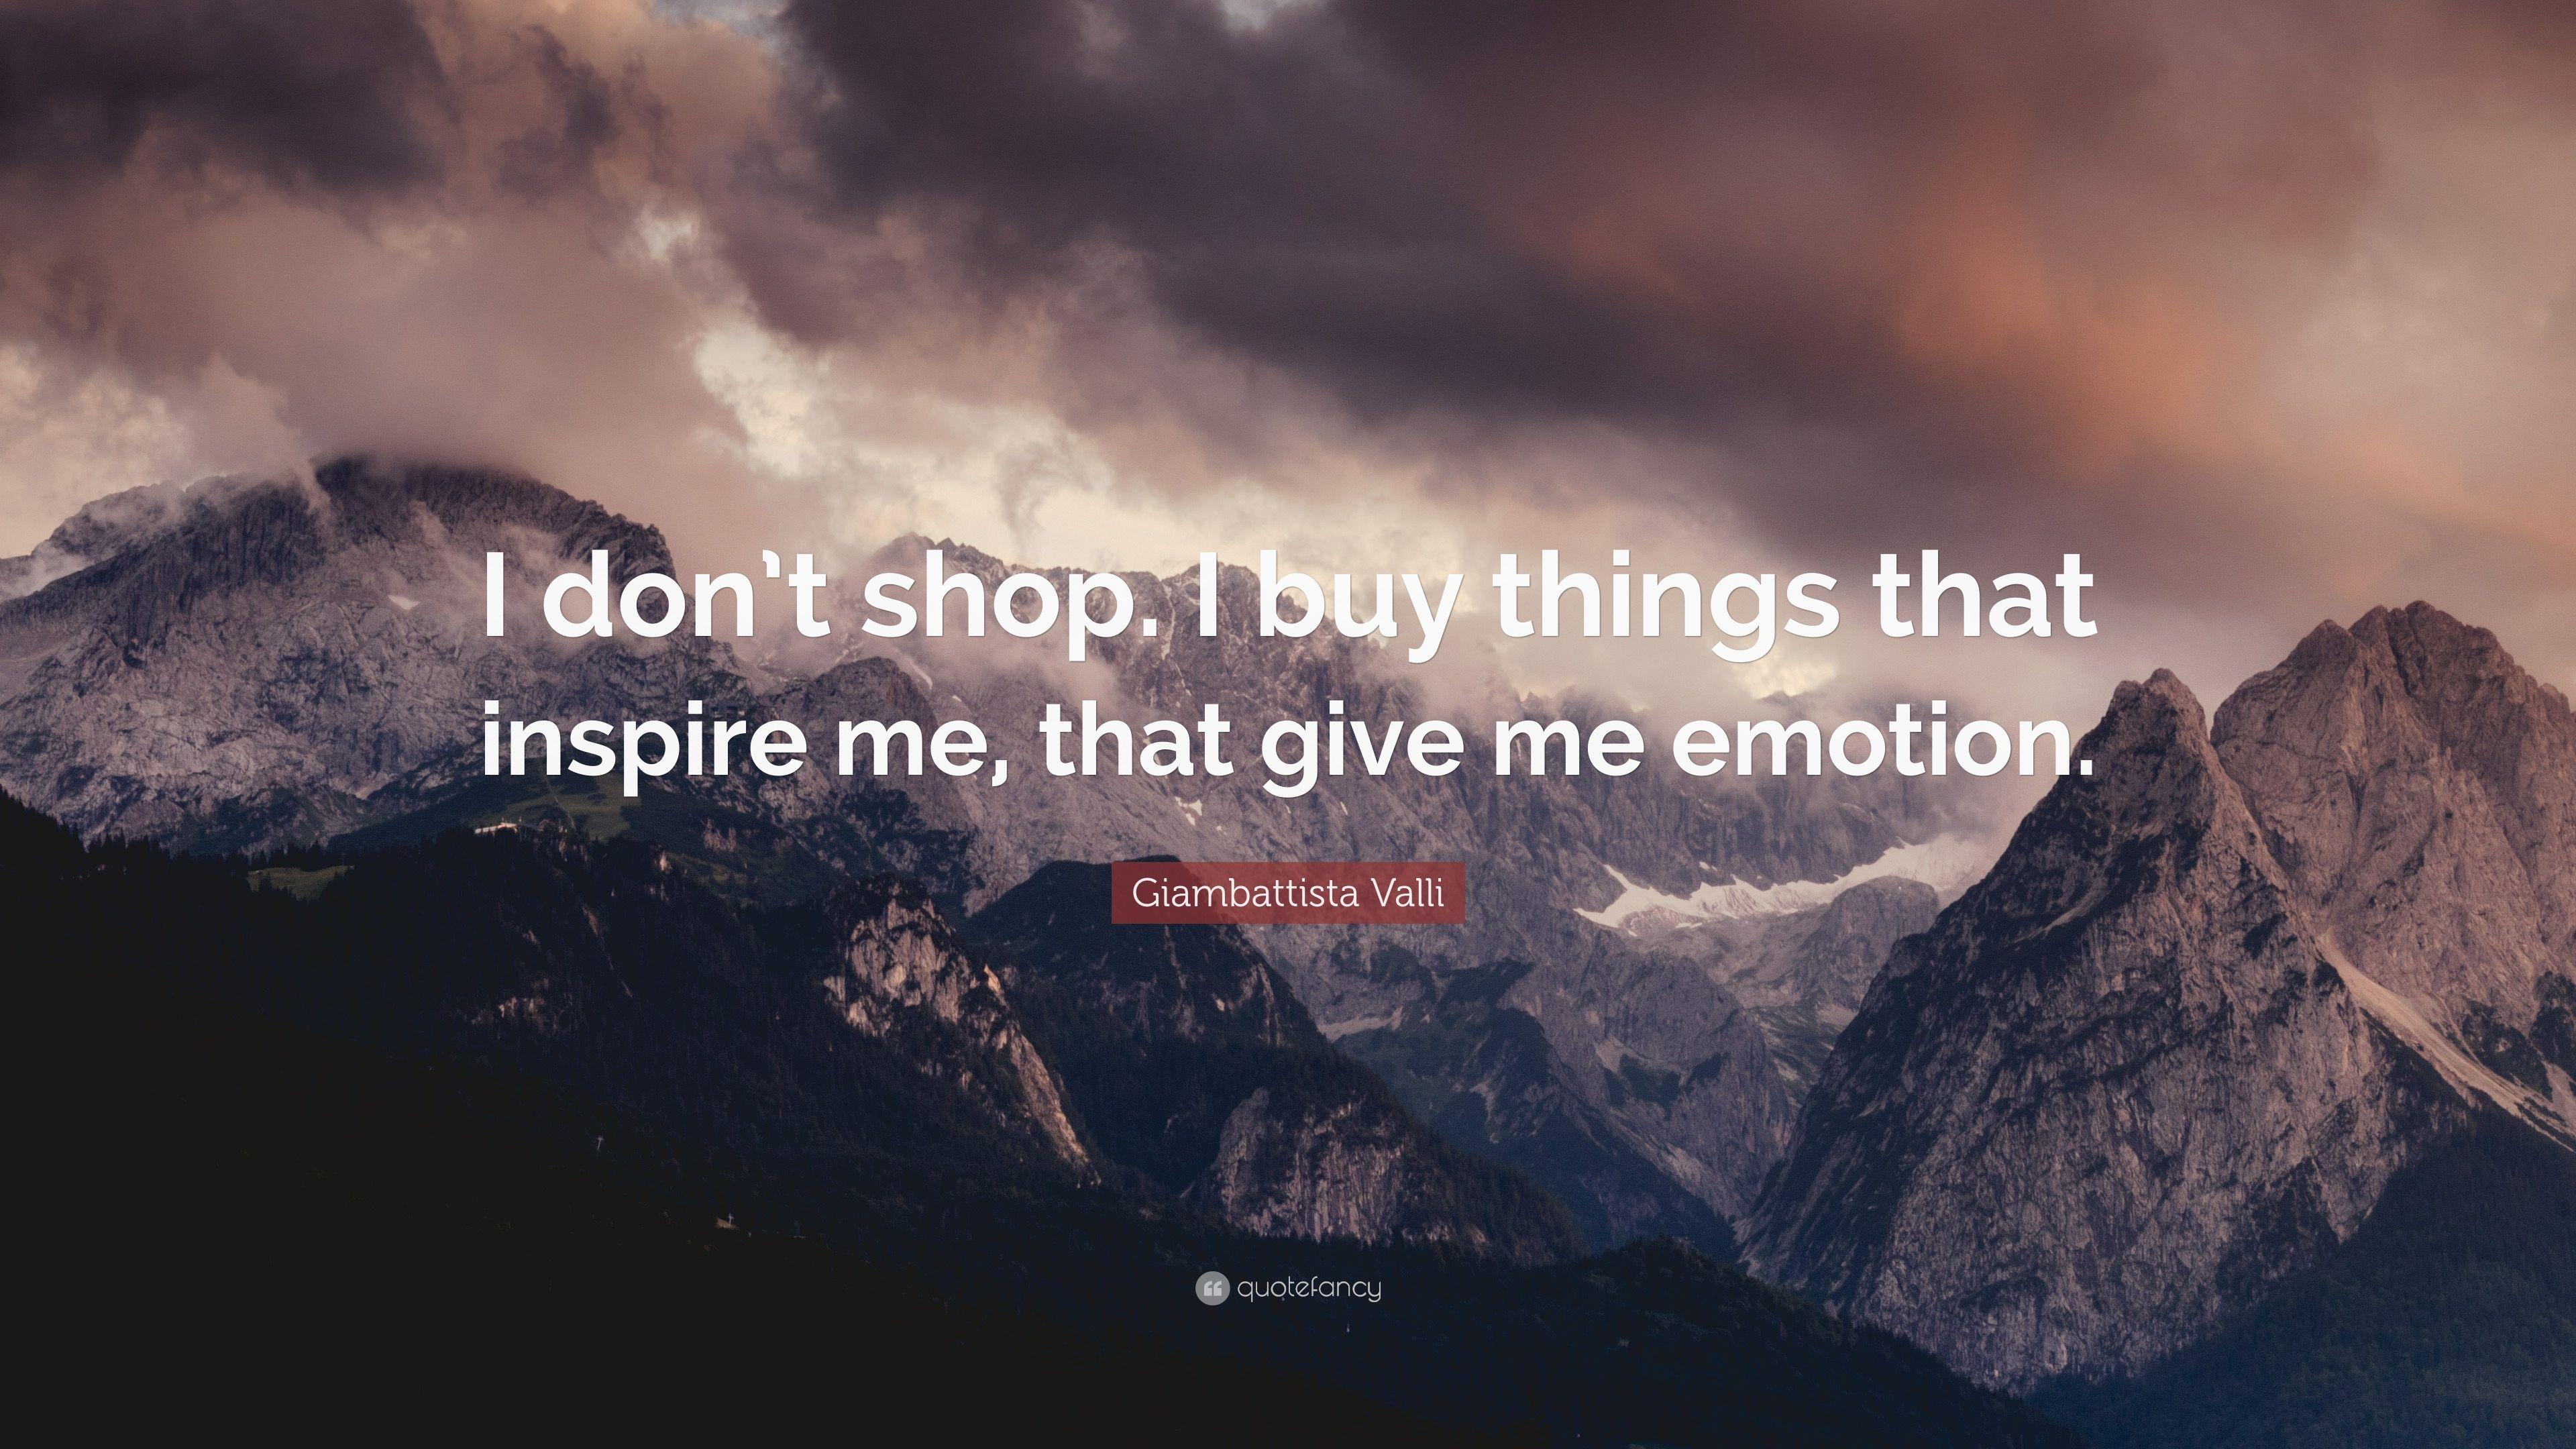 Giambattista Valli Quote: “I don't shop. I buy things that